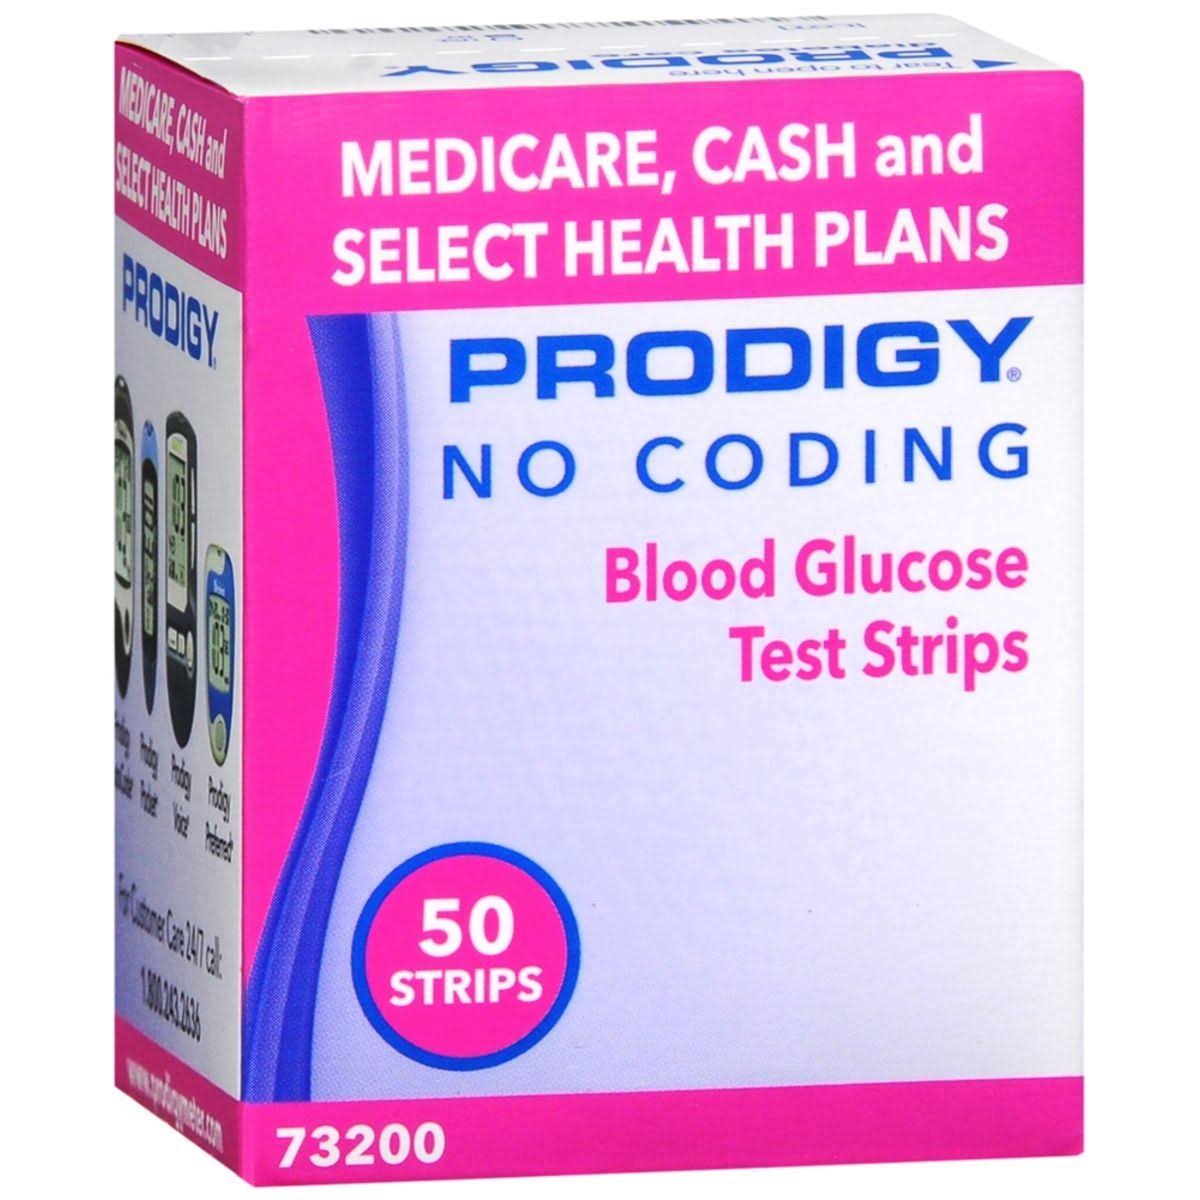 Prodigy No Coding Blood Glucose Test Strips - 50 Strips